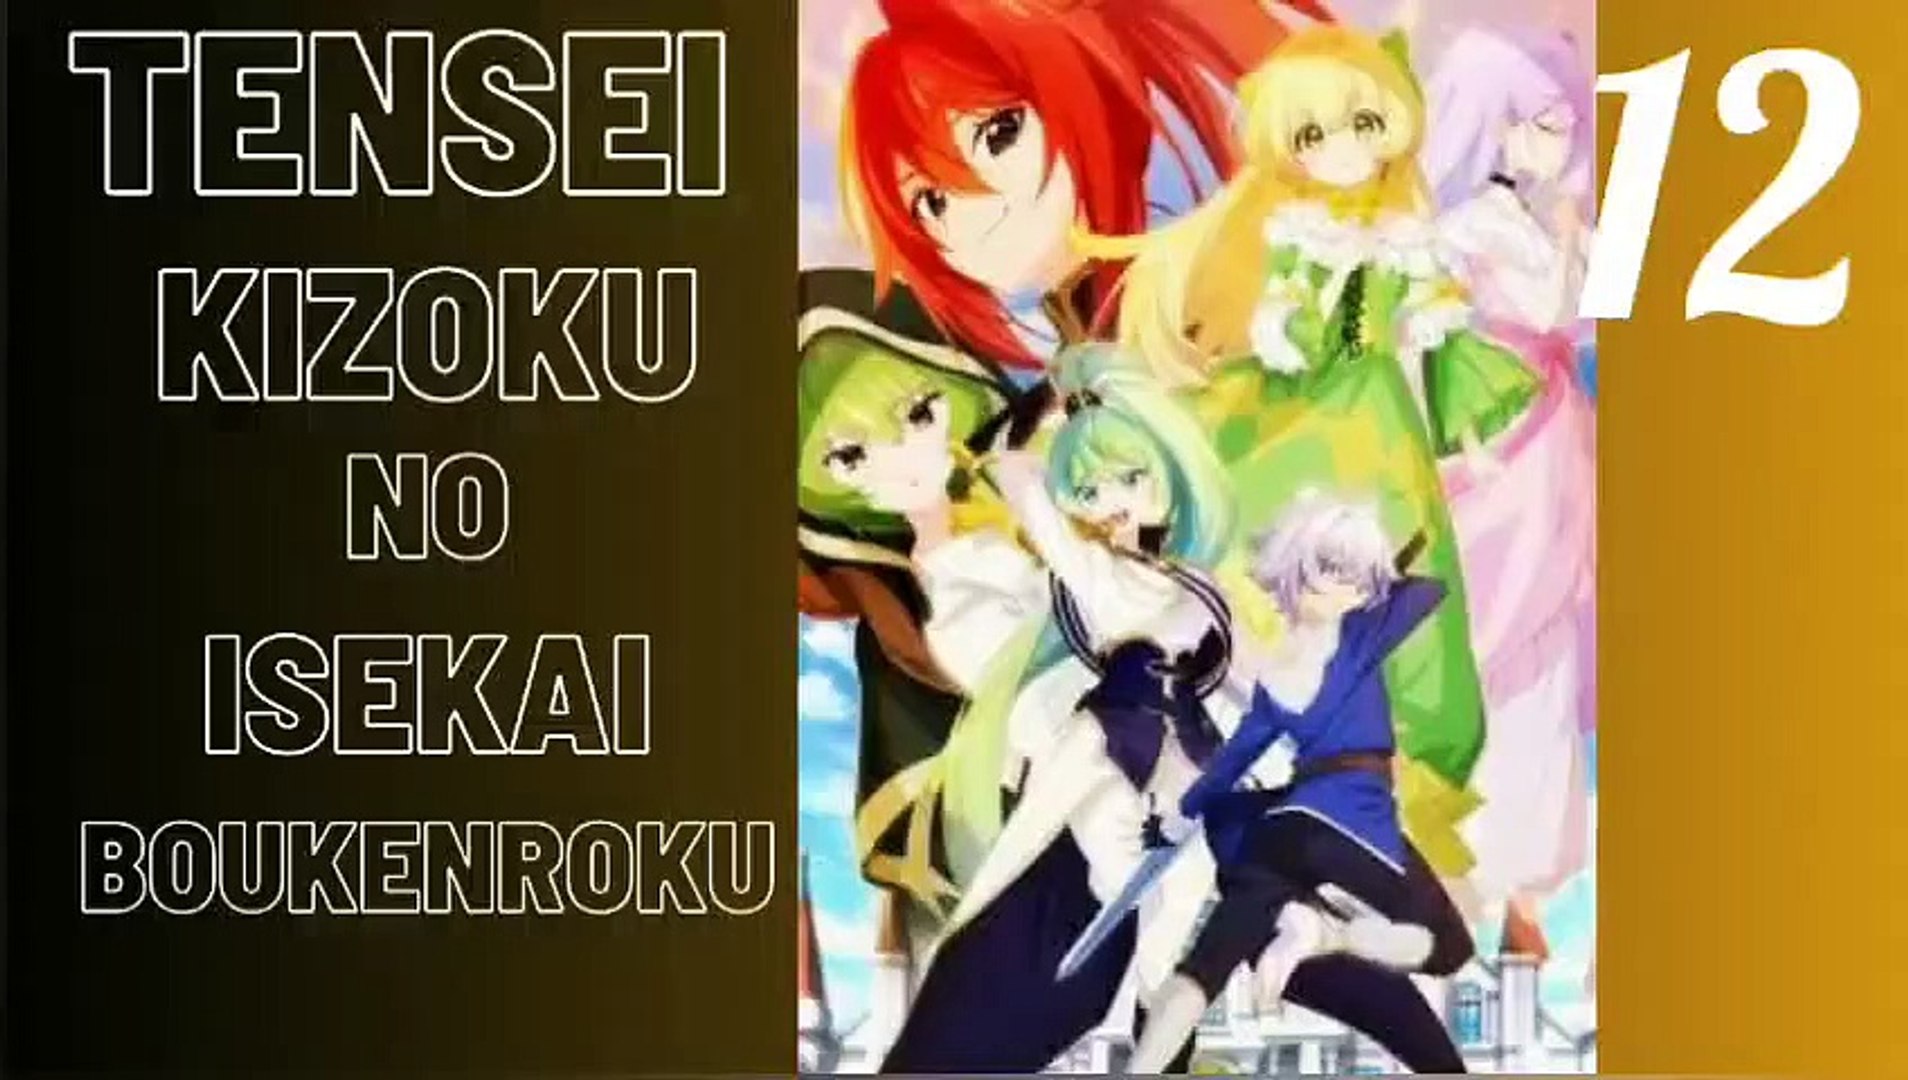 TENSEI KIZOKU NO ISekai BOUKENROKU ✓ EP 12 - video Dailymotion